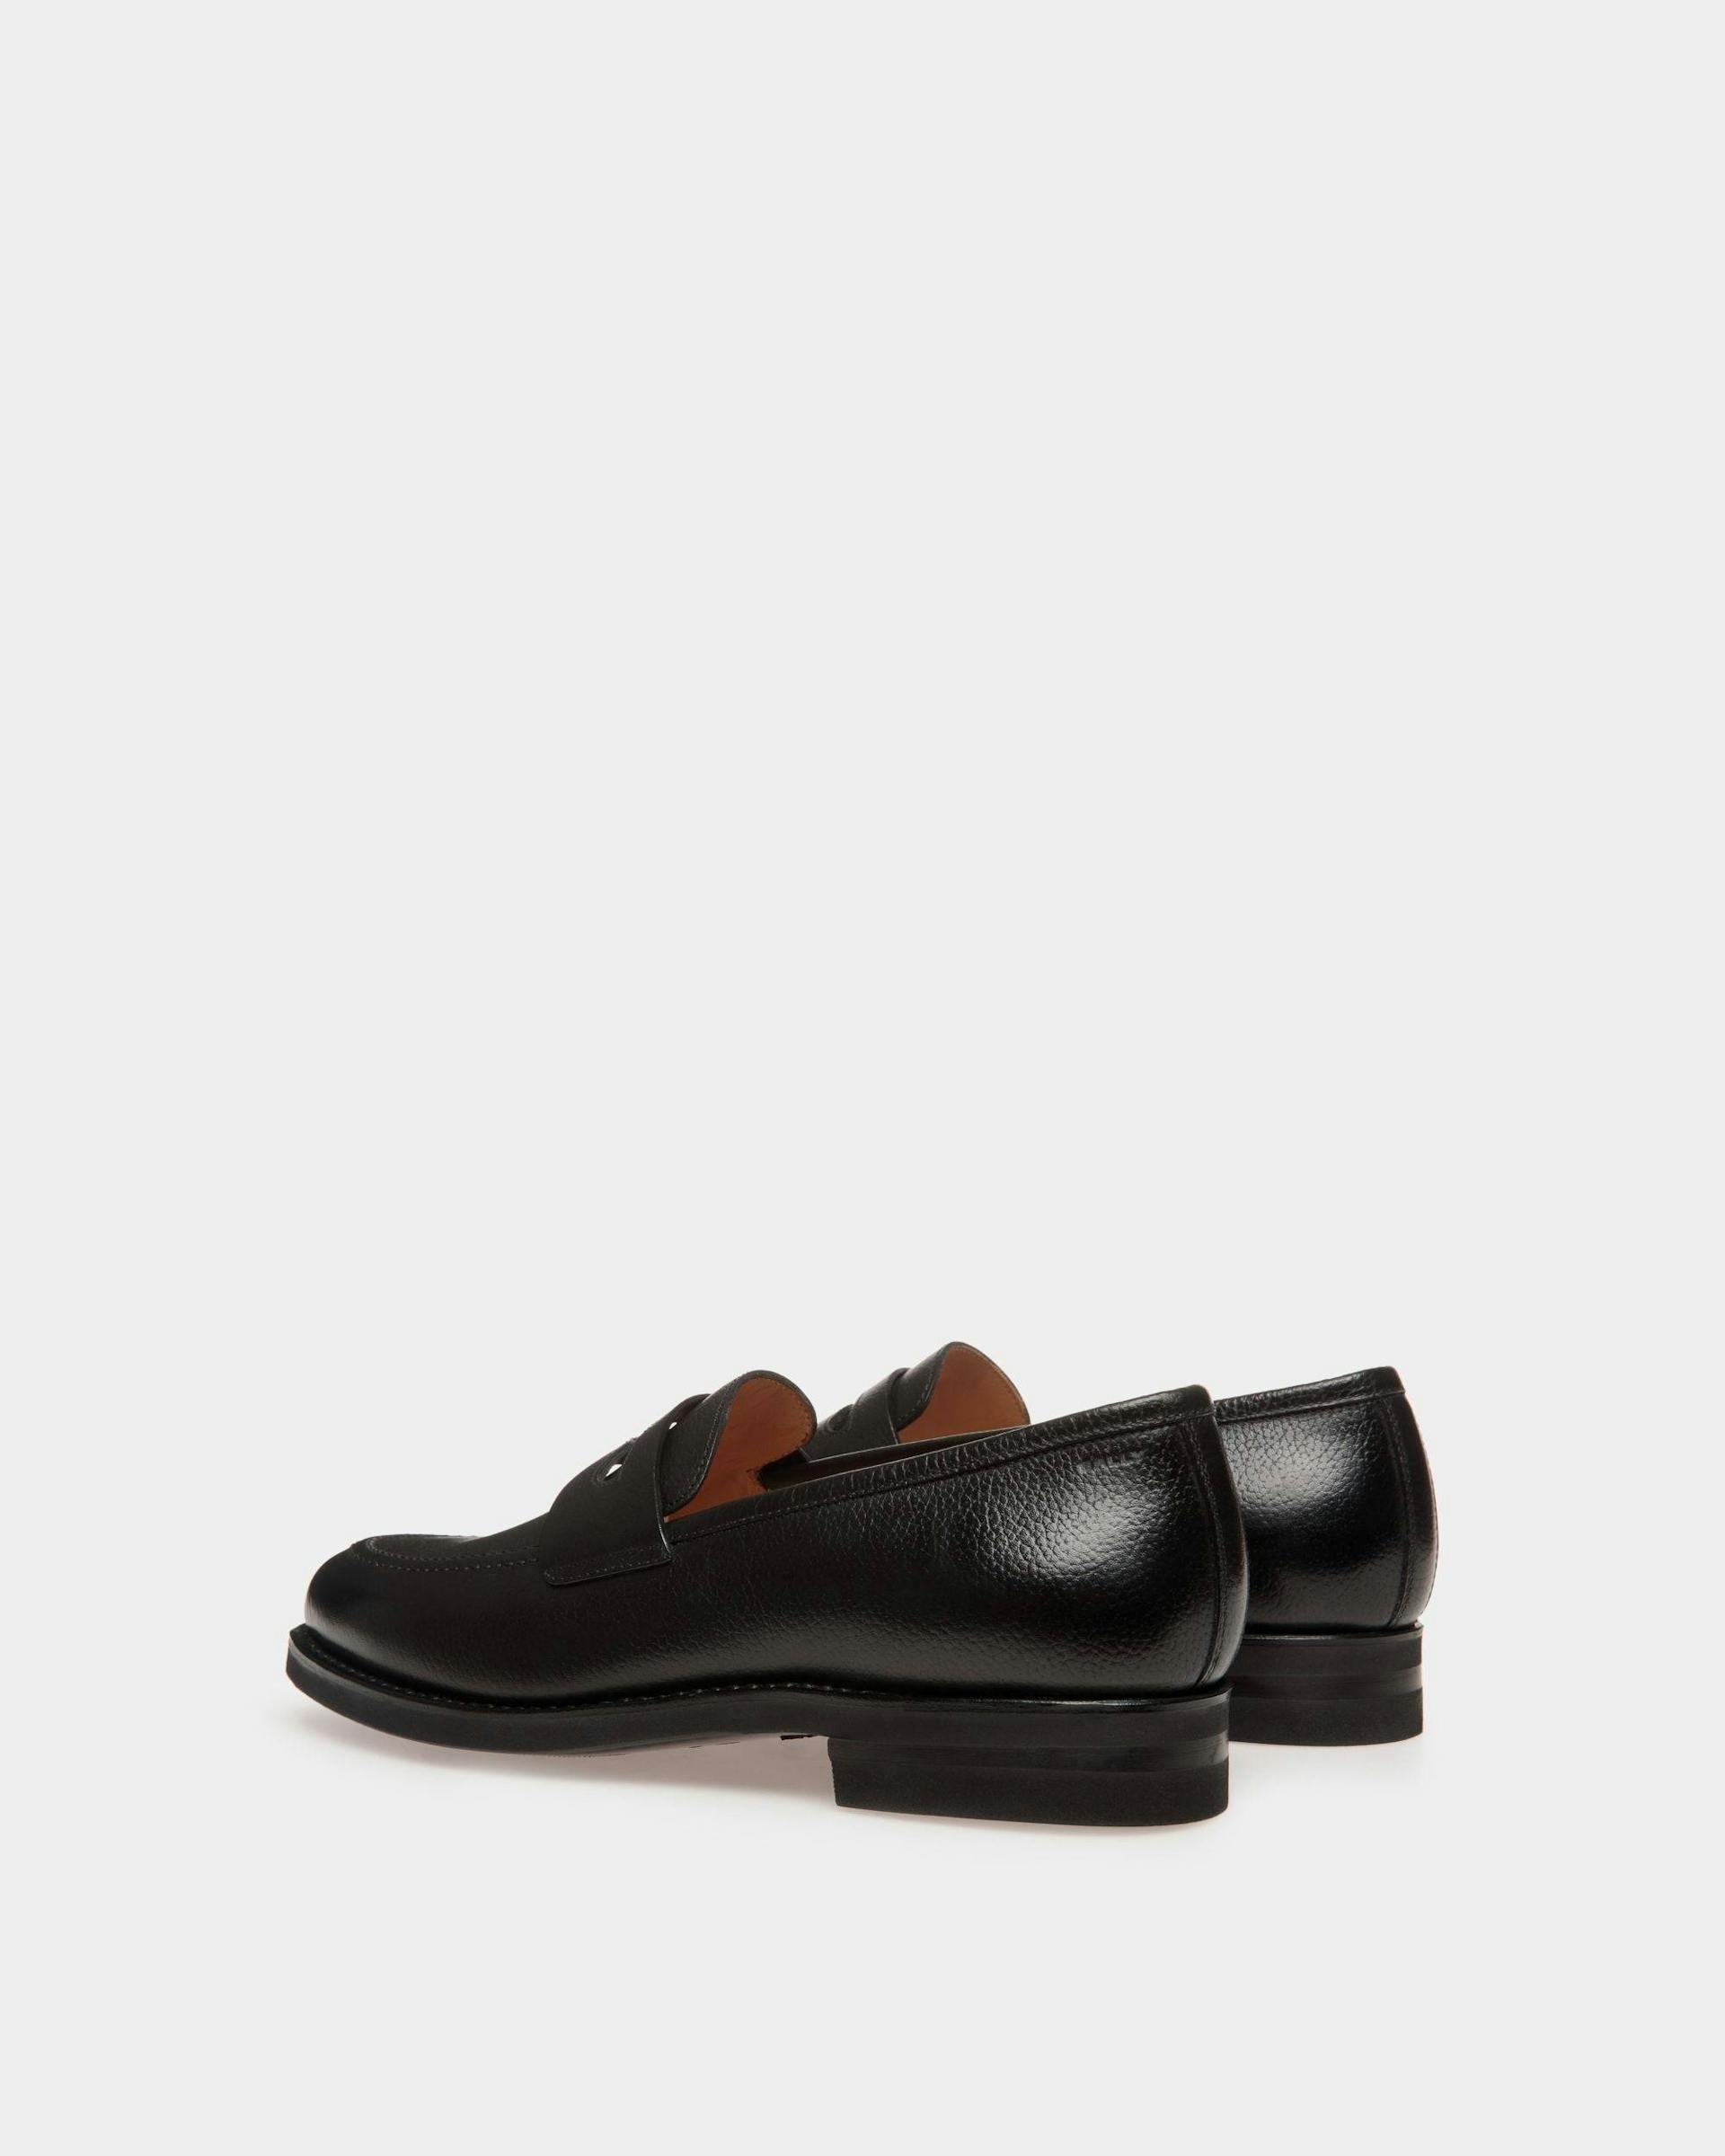 Men's Schoenen Loafer in Embossed Leather | Bally | Still Life 3/4 Back